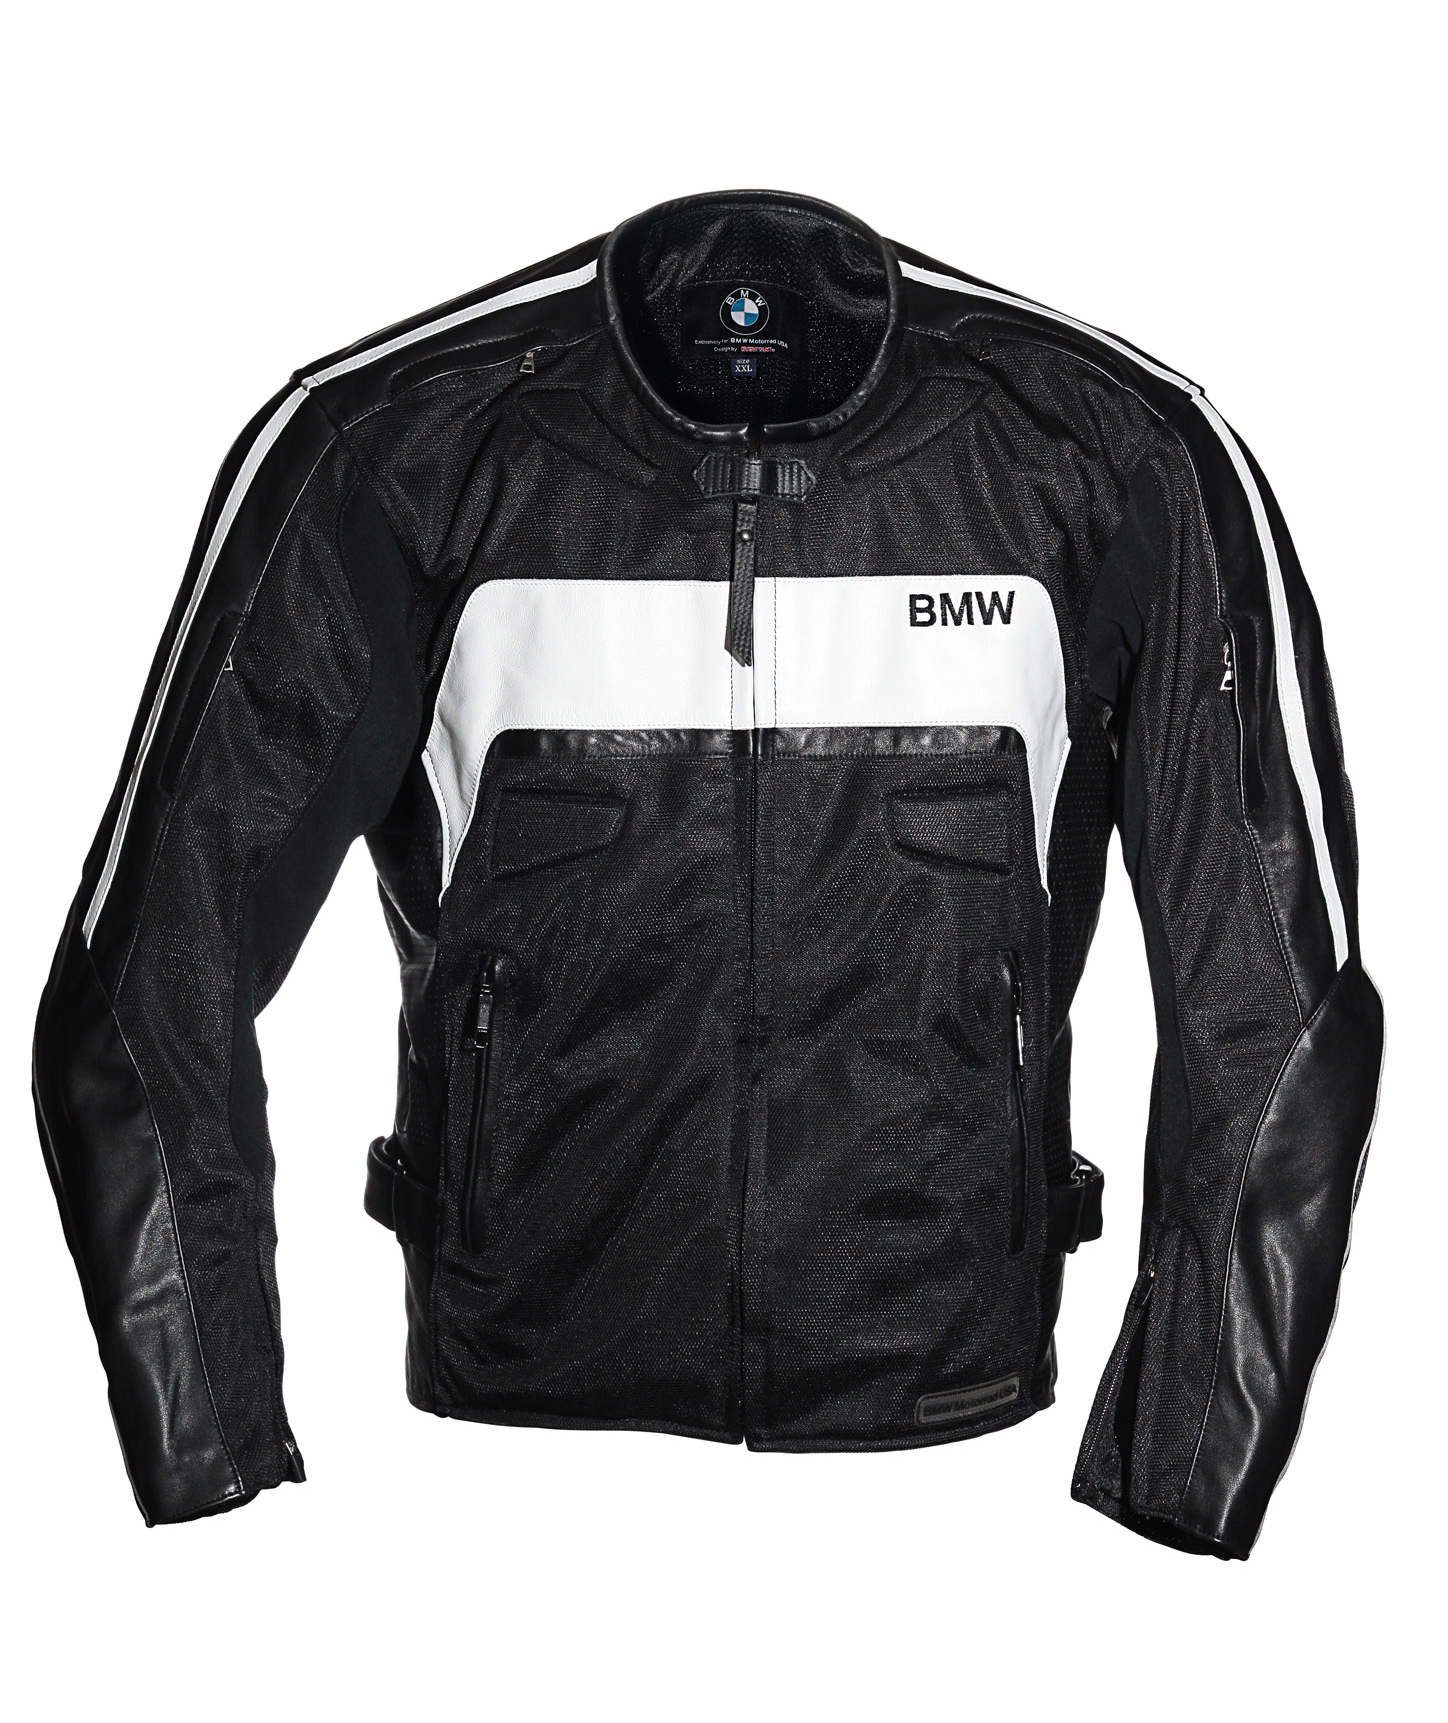 Bmw airflow 2 jacket sizing #5